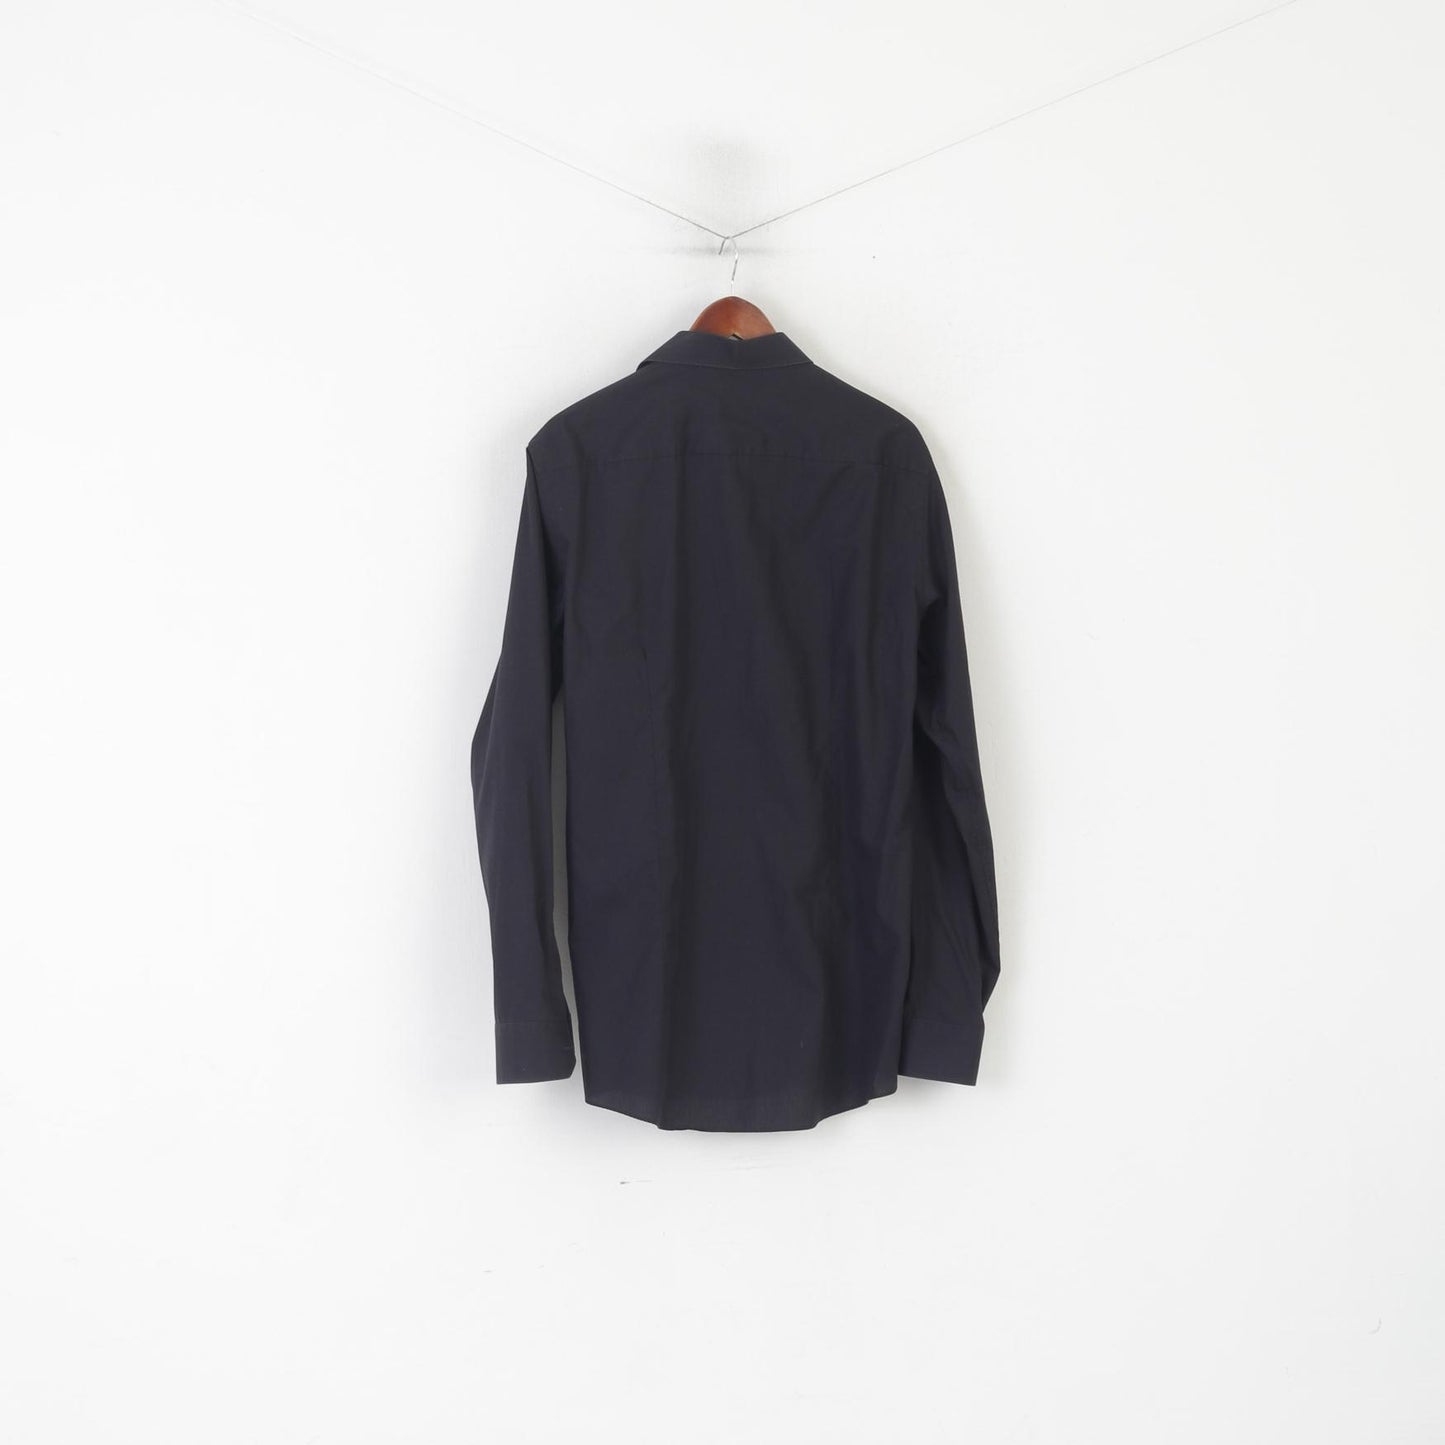 Venti Men 42 L Casual Shirt Black Cotton Plain Elegent Long Sleeve Non-Iron Top